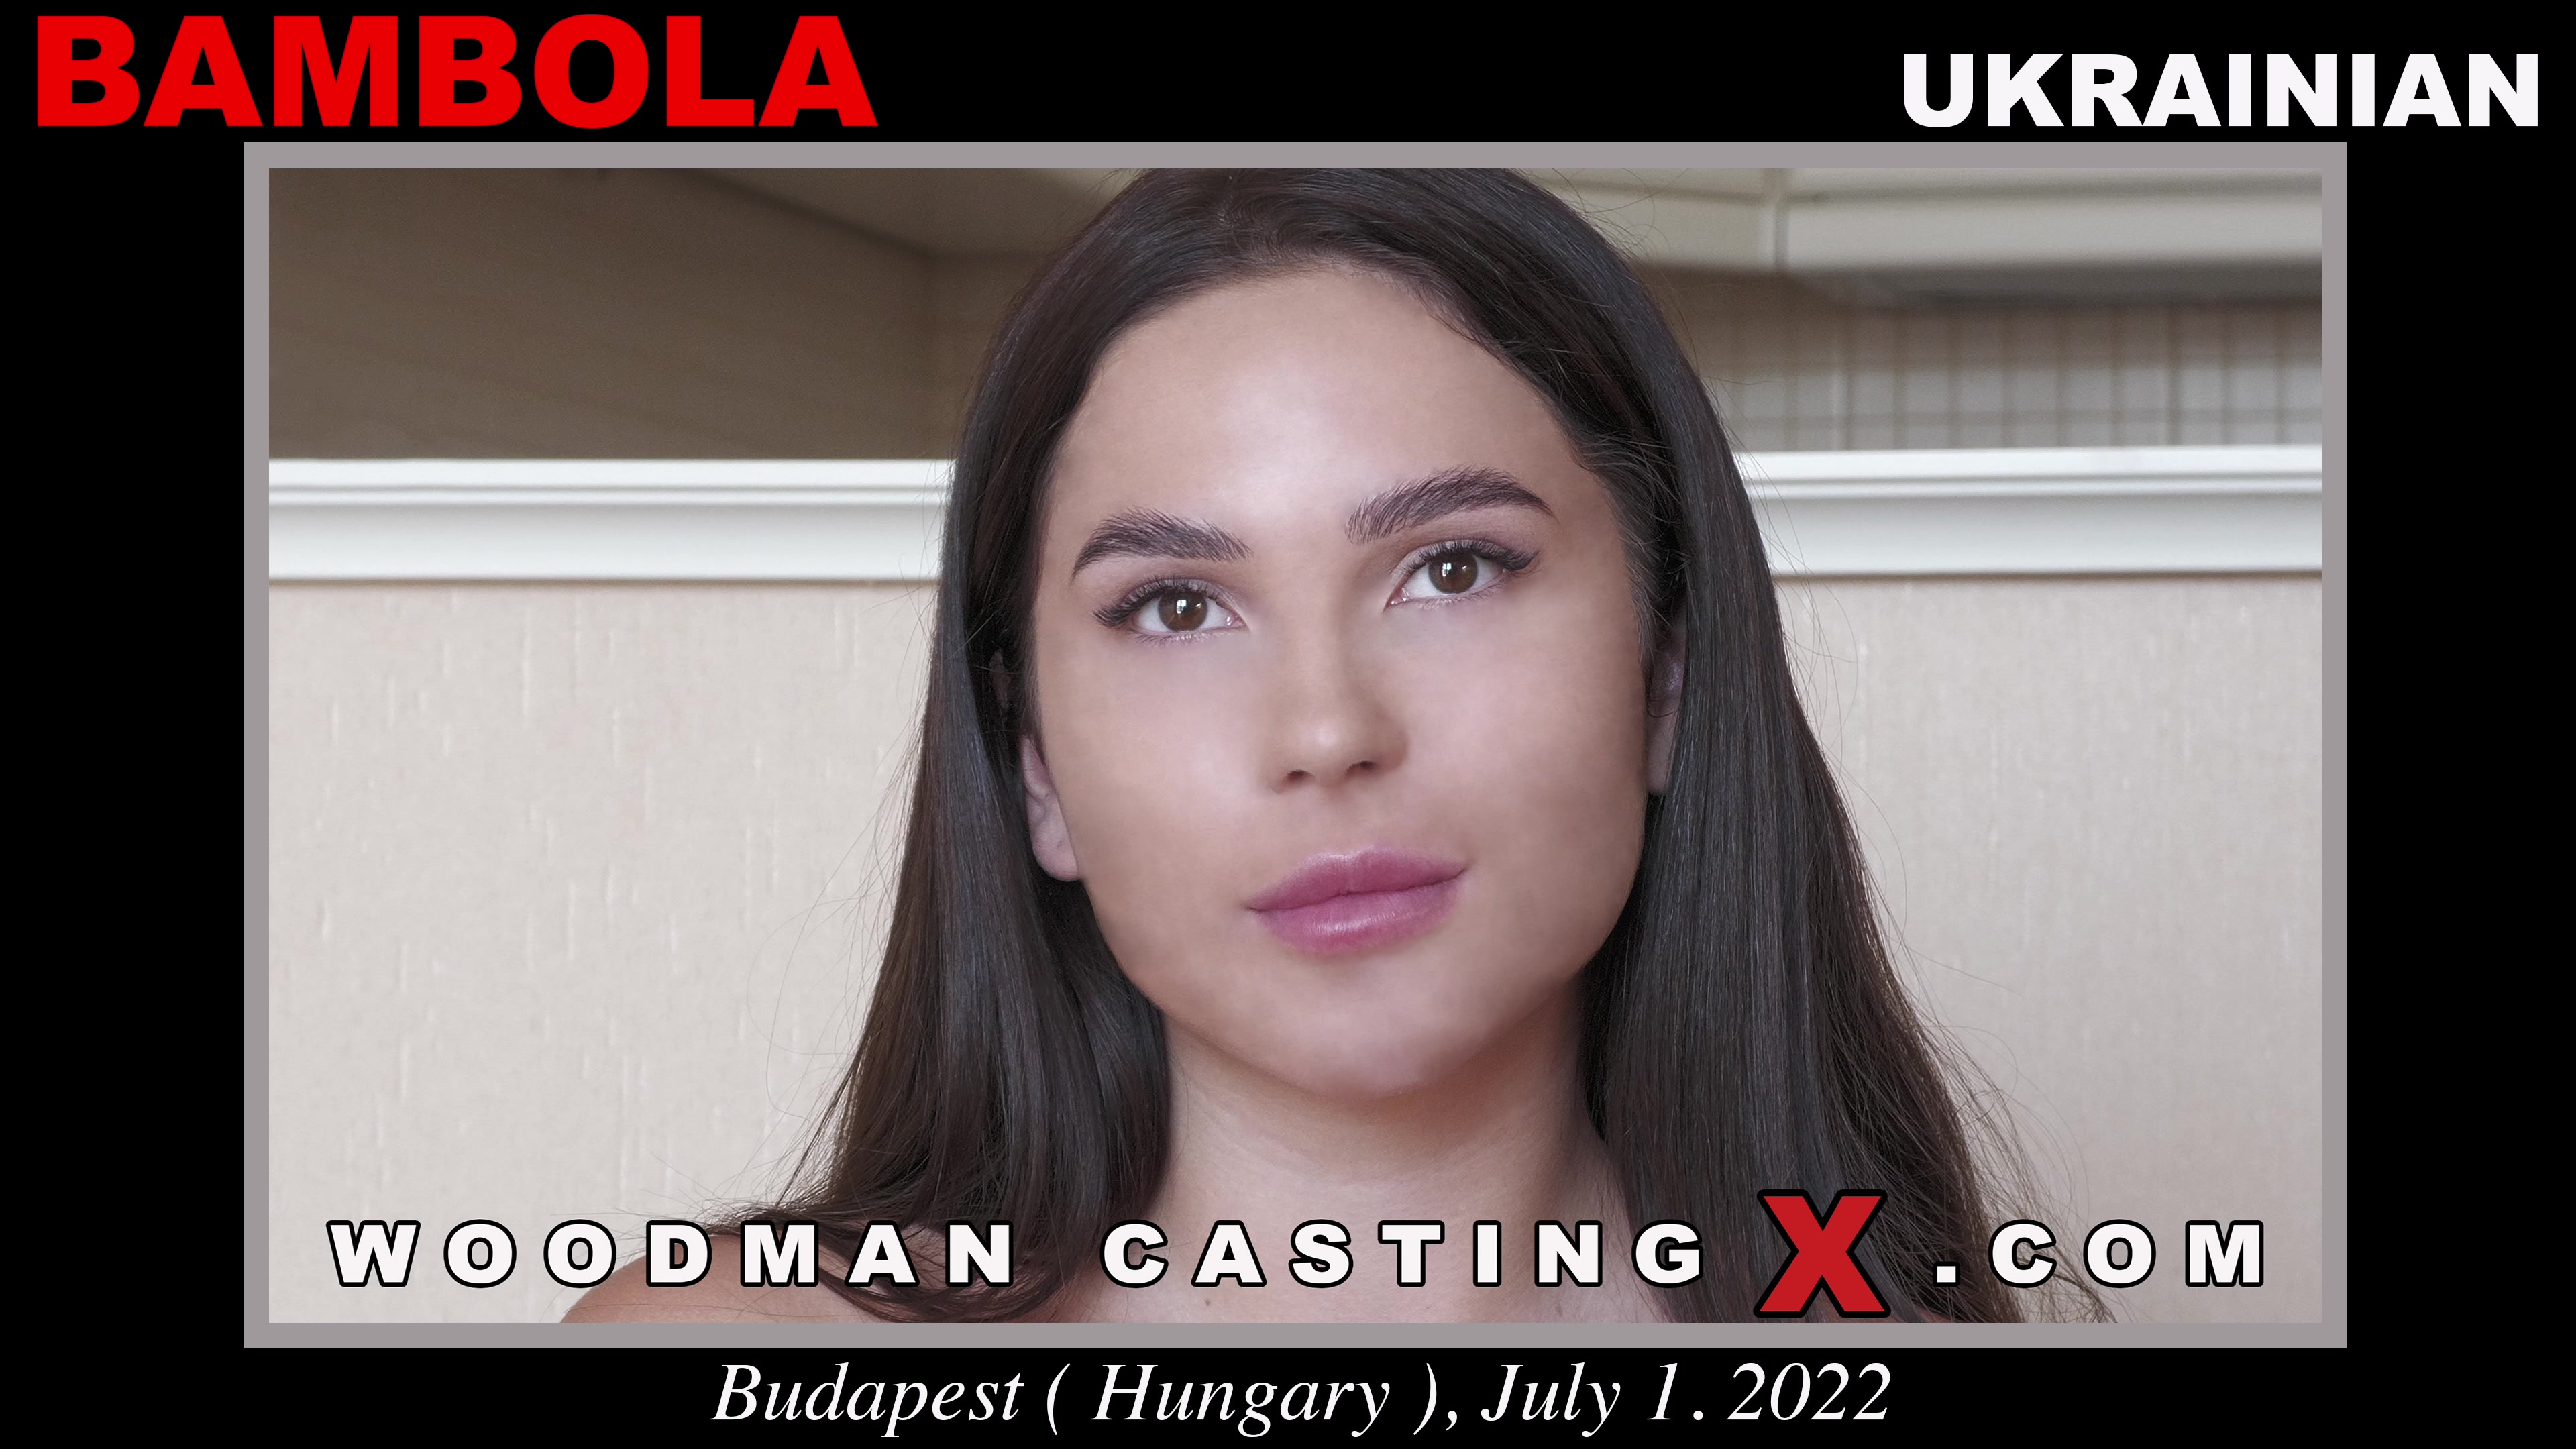 Woodman Casting X on X: [New Video] Bambola